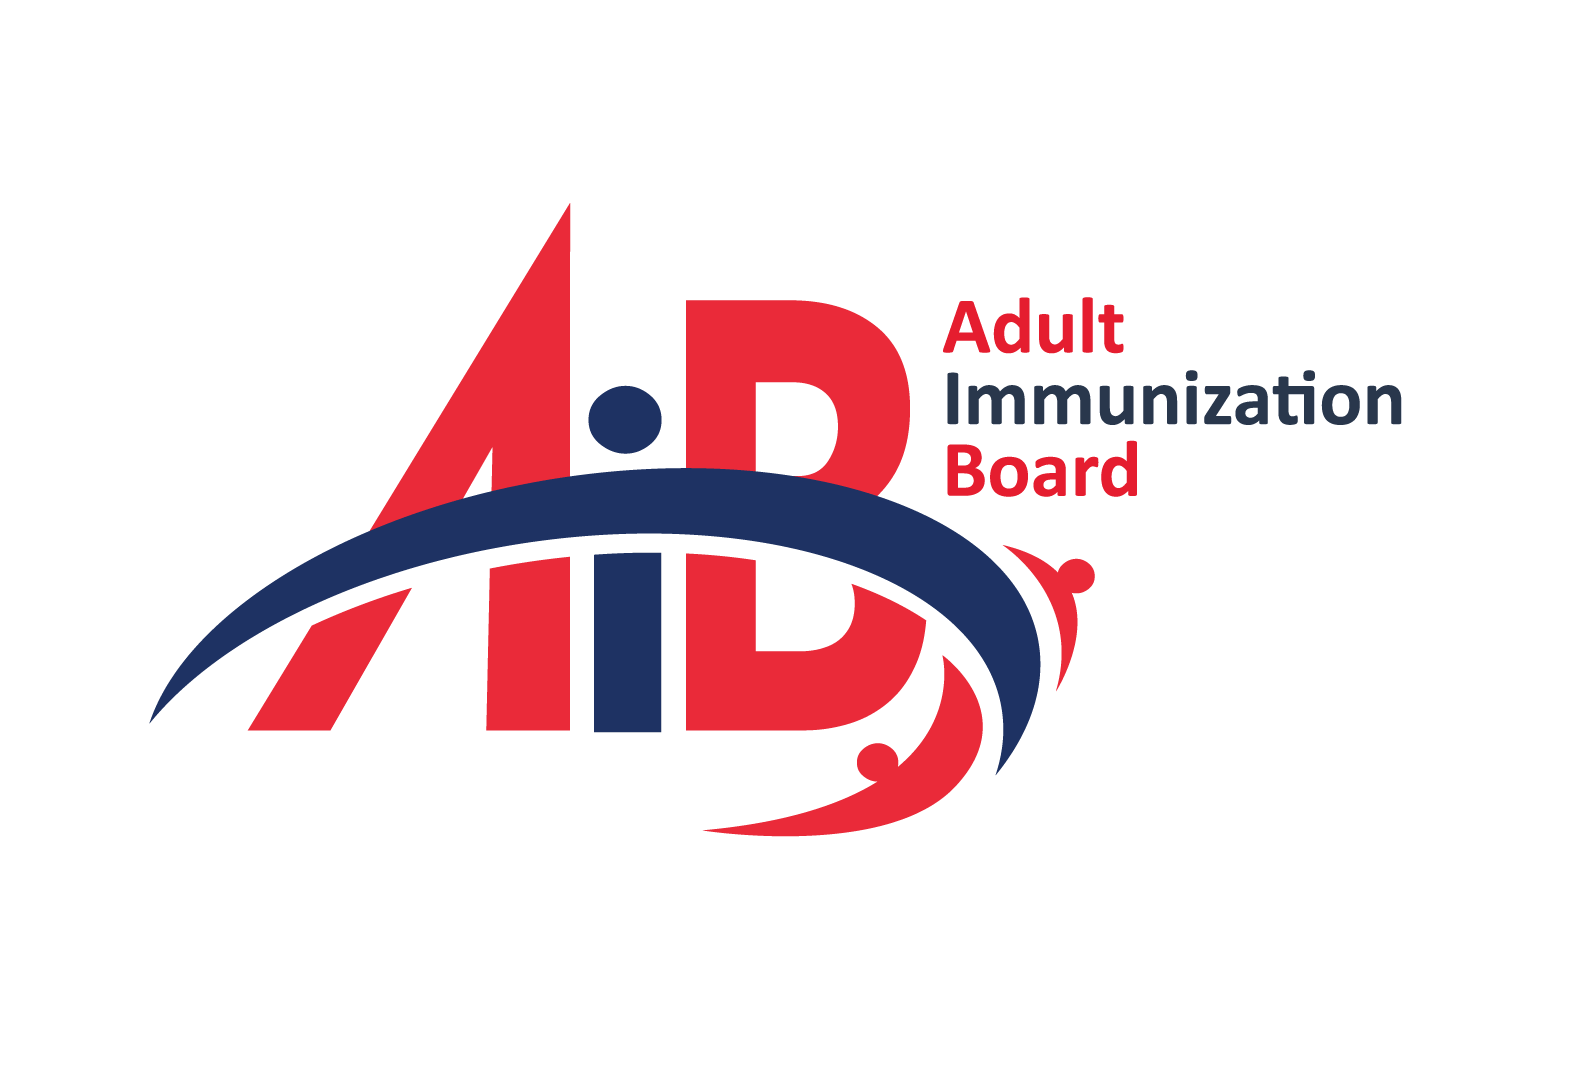 Adult Immunization Board